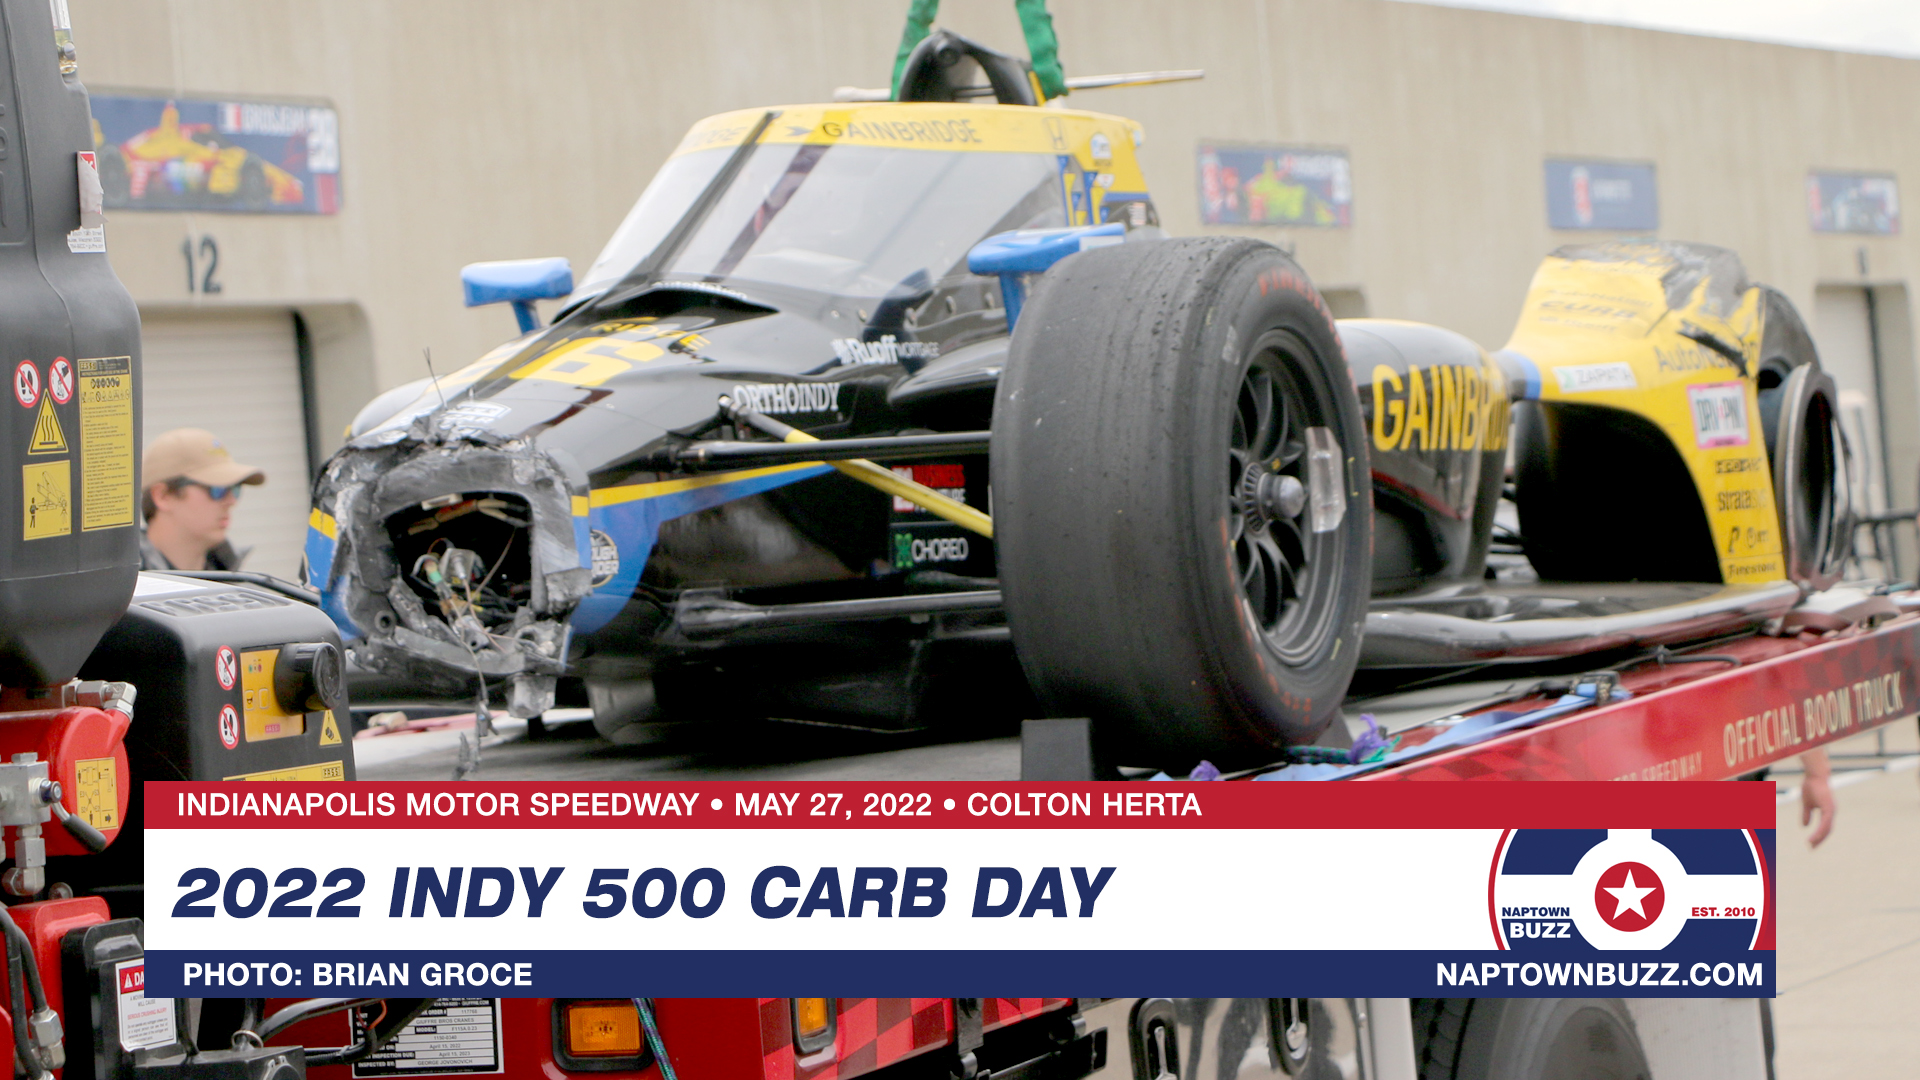 Indy 500 Carb Day May 27, 2022 Colton Herta Car Crash